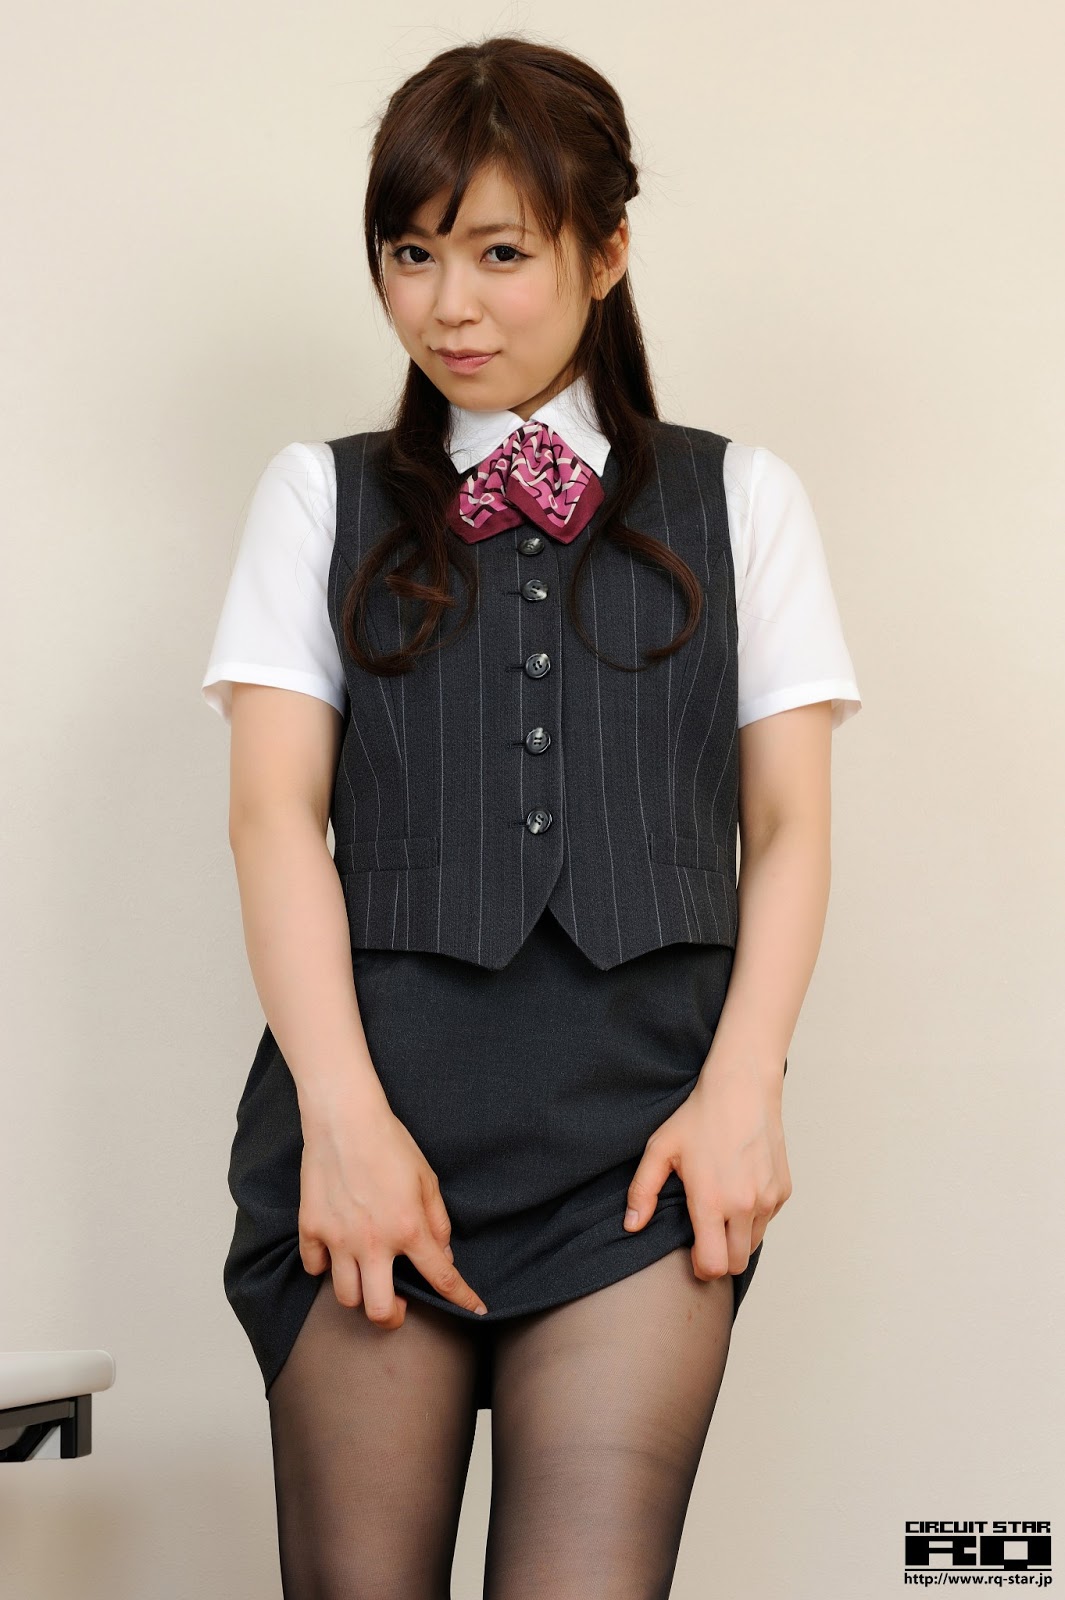 Yuri Shibuya Japanese Sexy Race Queen Sexy Secretary Uniform And Black Socking Part 3 Photo